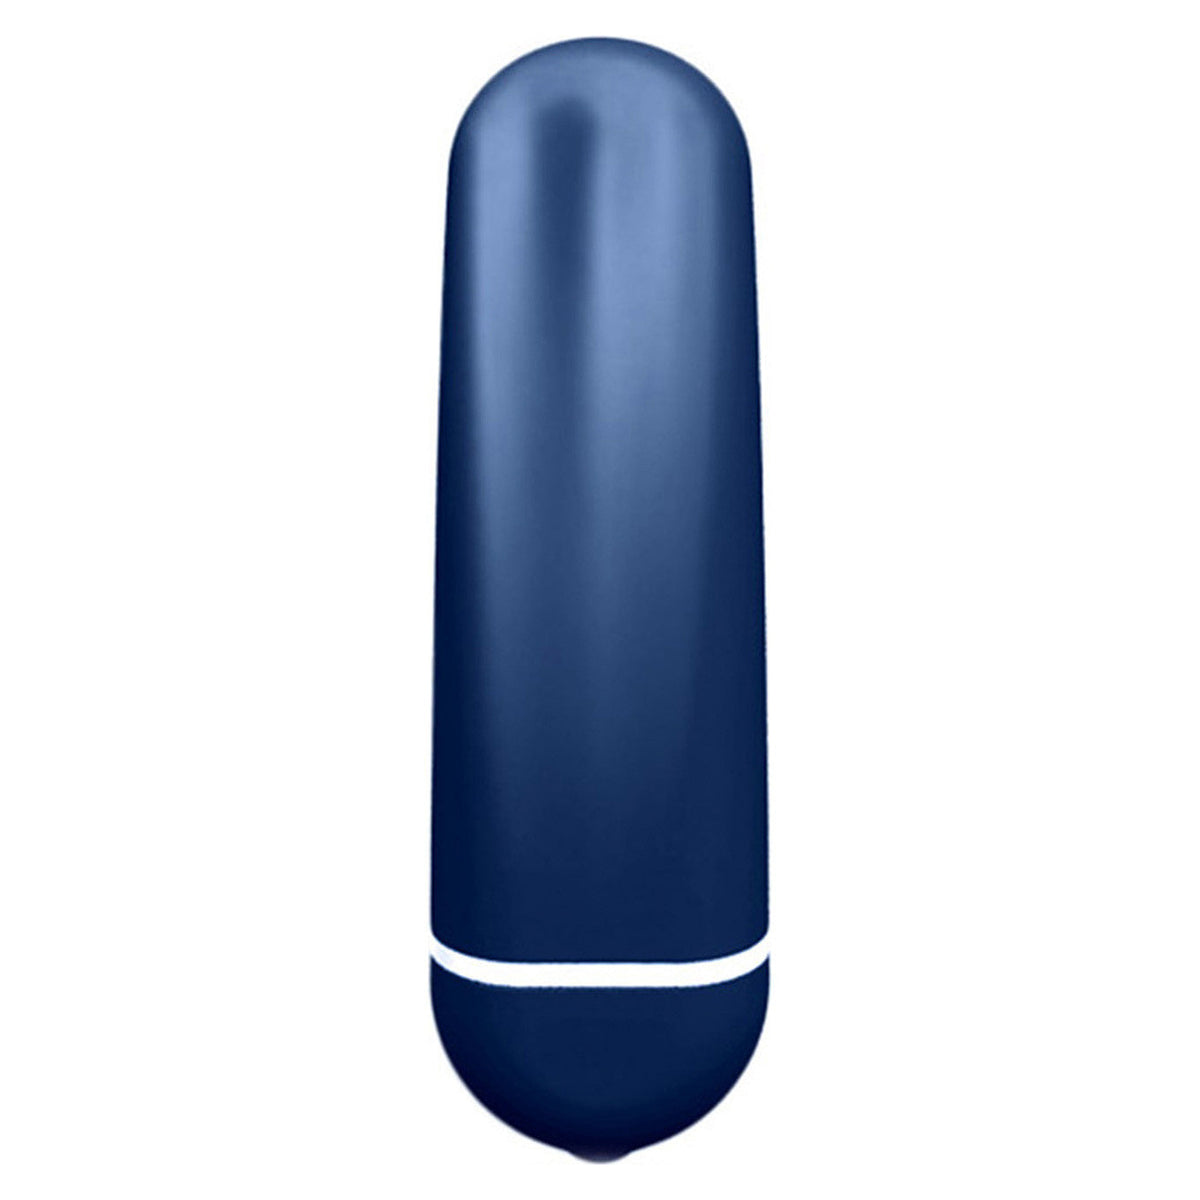 JimmyJane - Live Sexy Intro 1 Mini Travel Vibrator (Blue) -  Bullet (Vibration) Non Rechargeable  Durio.sg